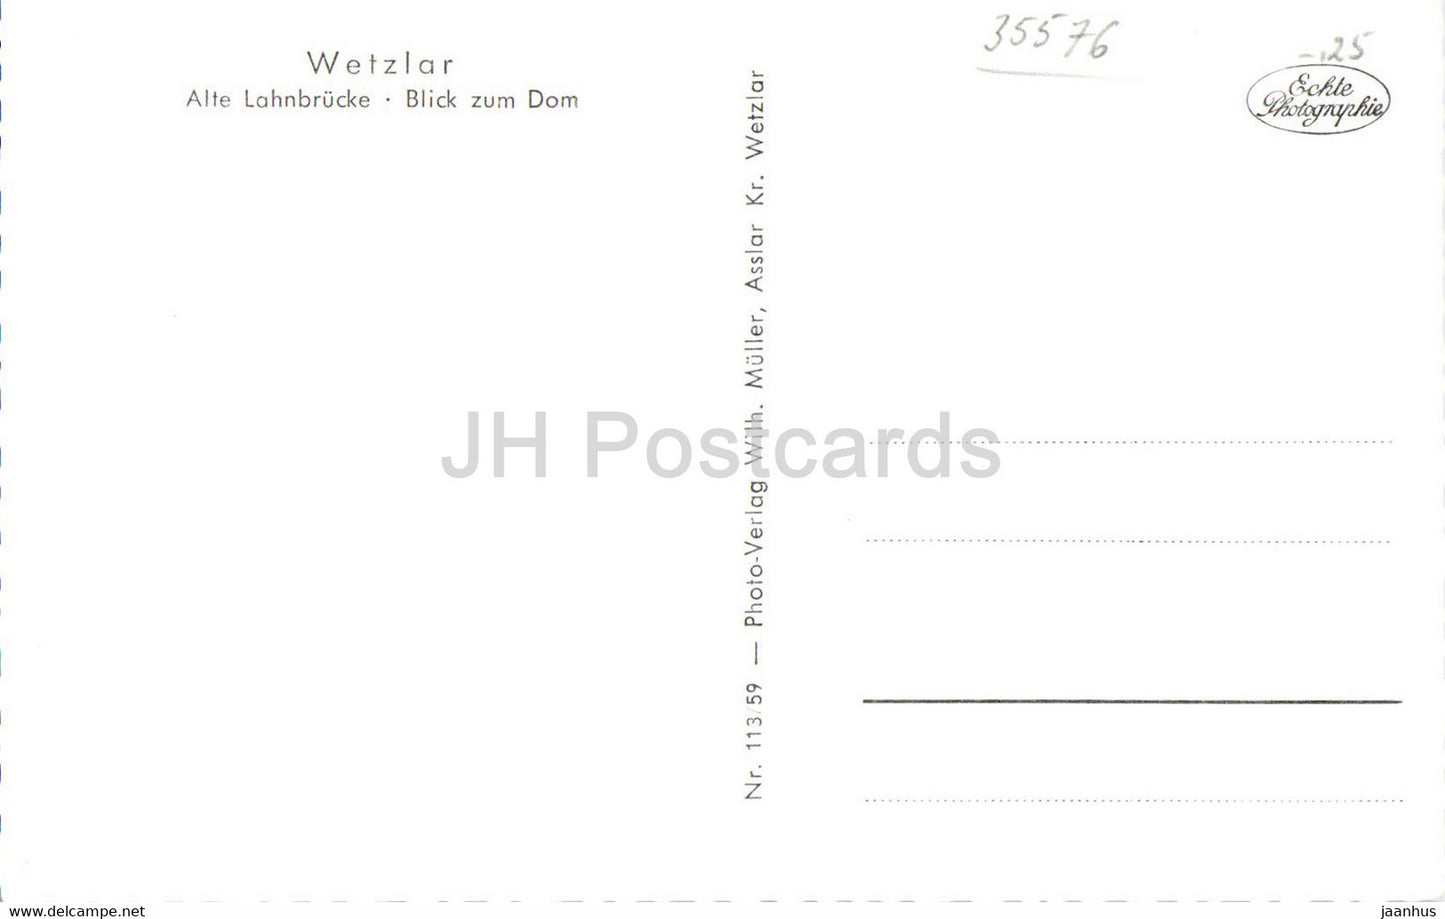 Wetzlar - Alte Lahnbrucke - Blick zum Dom - pont - carte postale ancienne - Allemagne - inutilisé